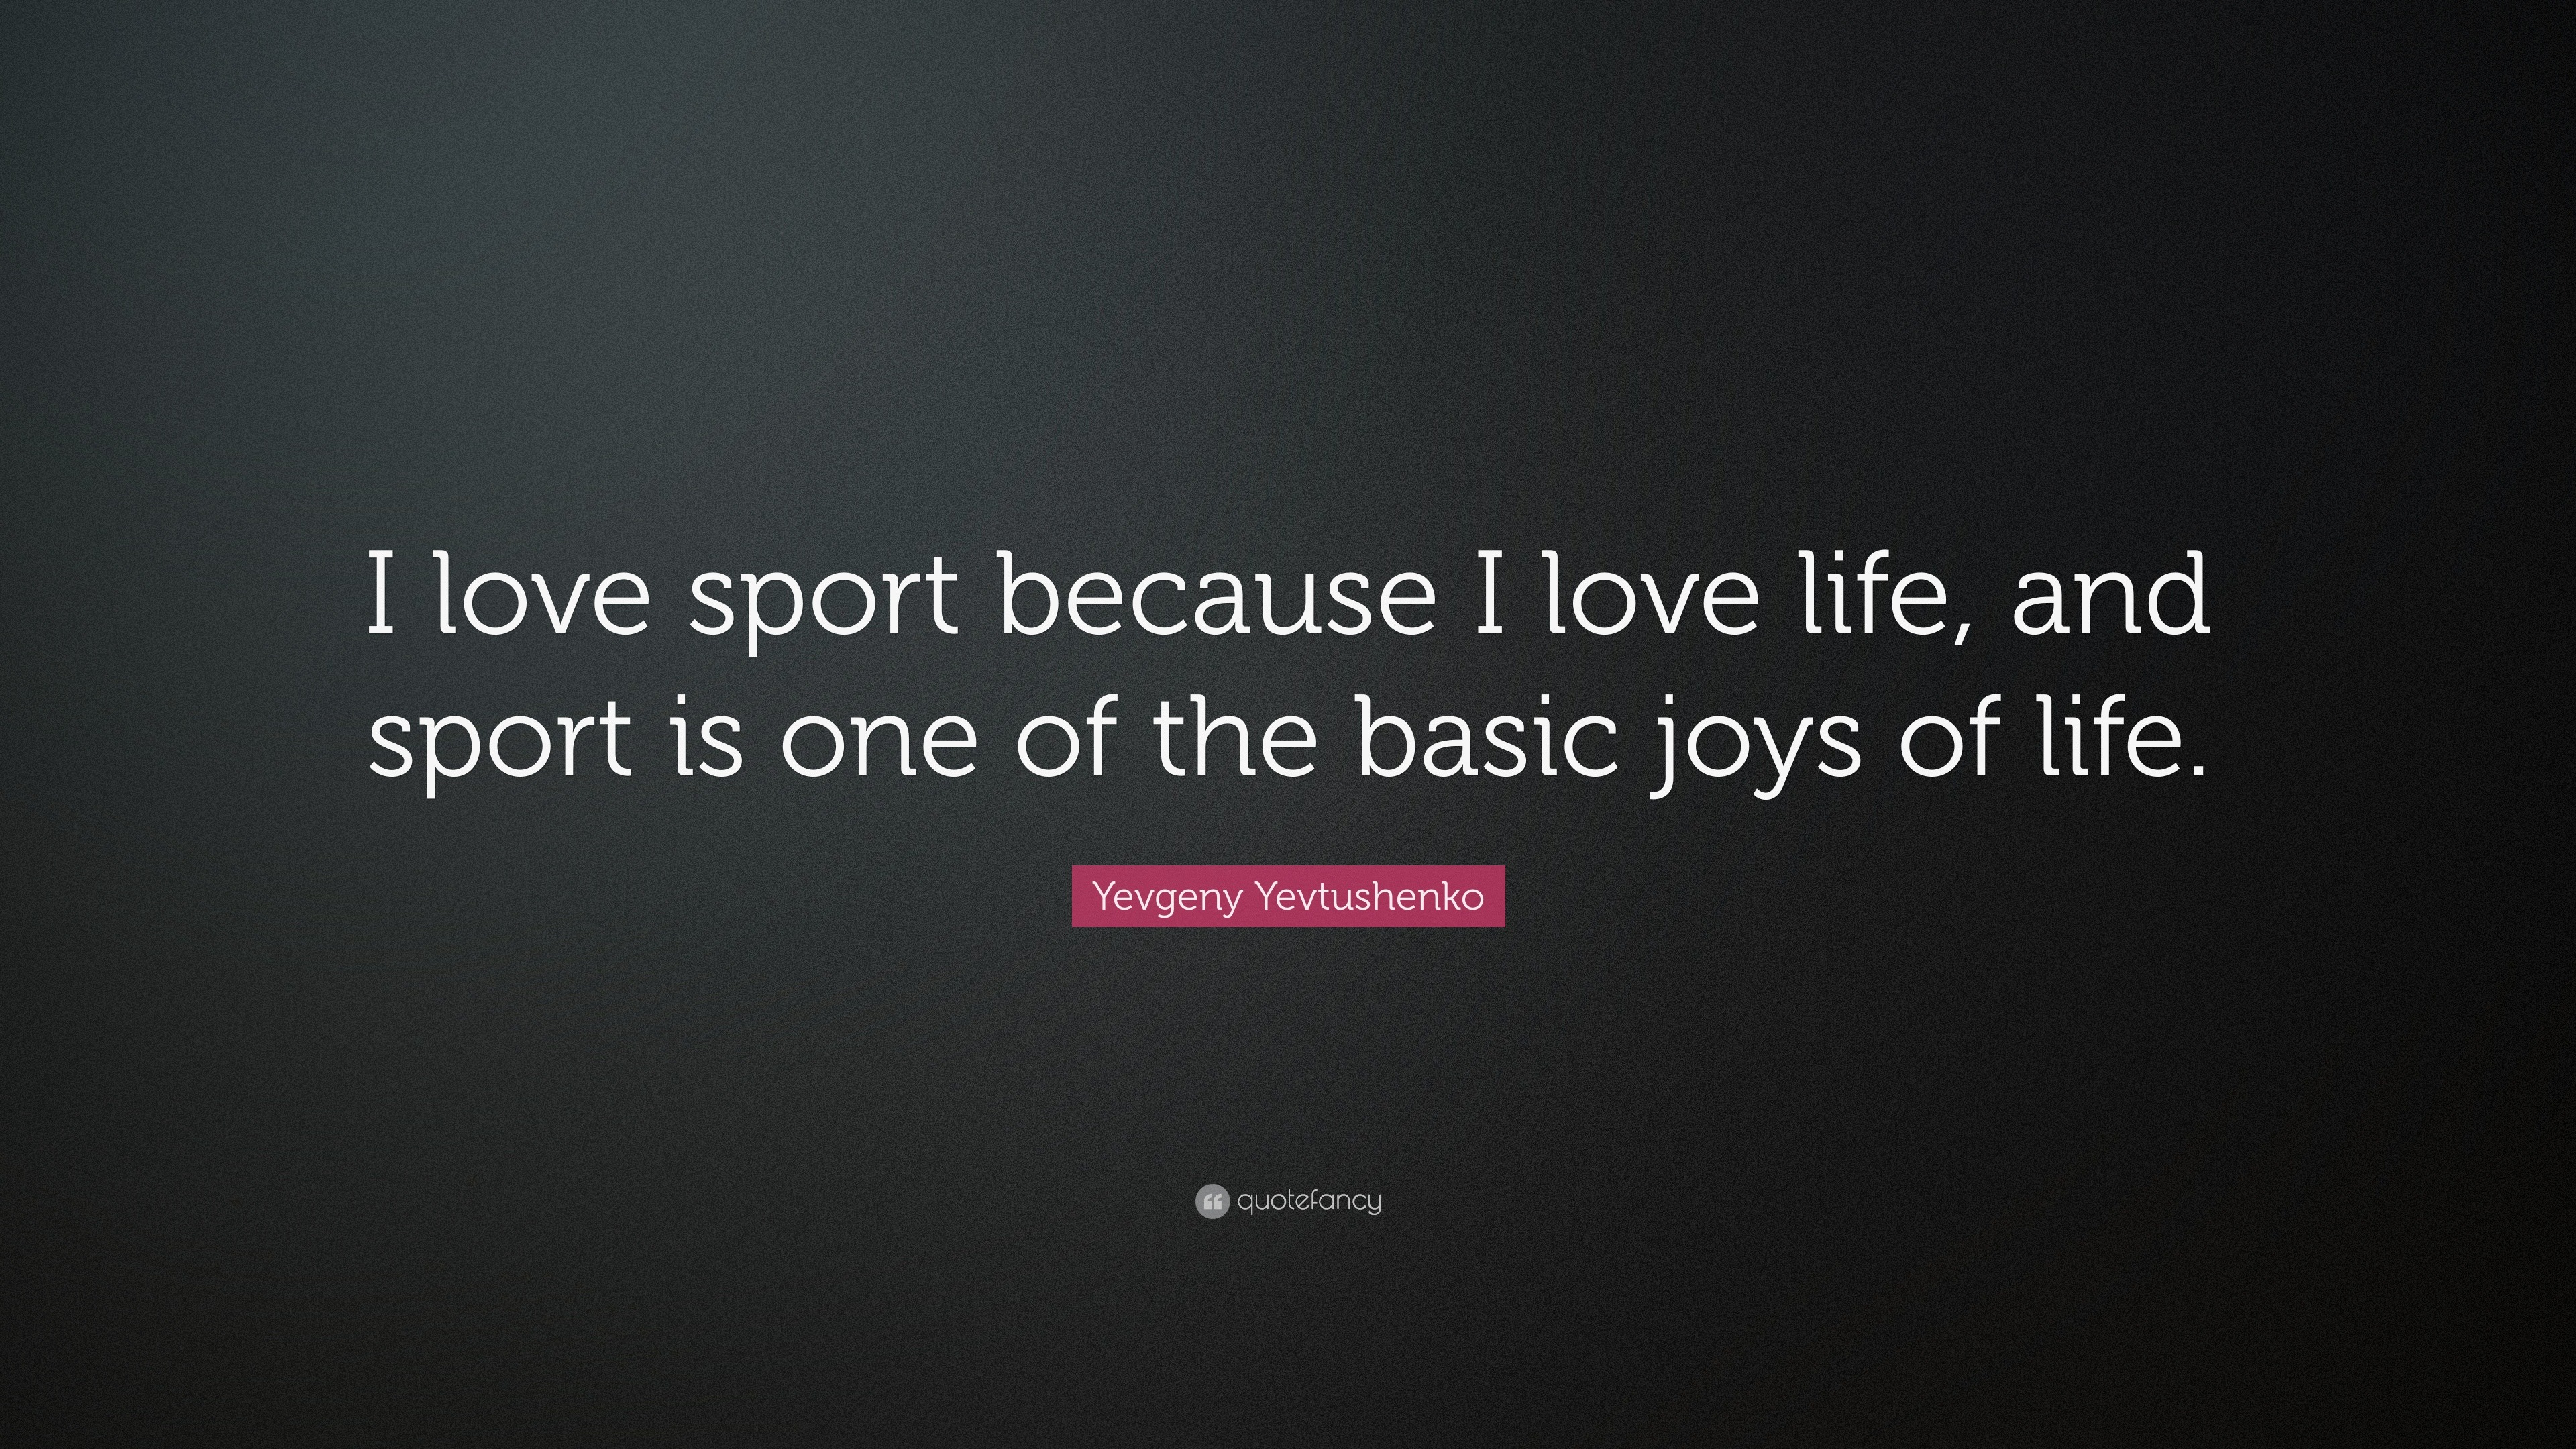 Yevgeny Yevtushenko Quote: “I love sport because I love life, and